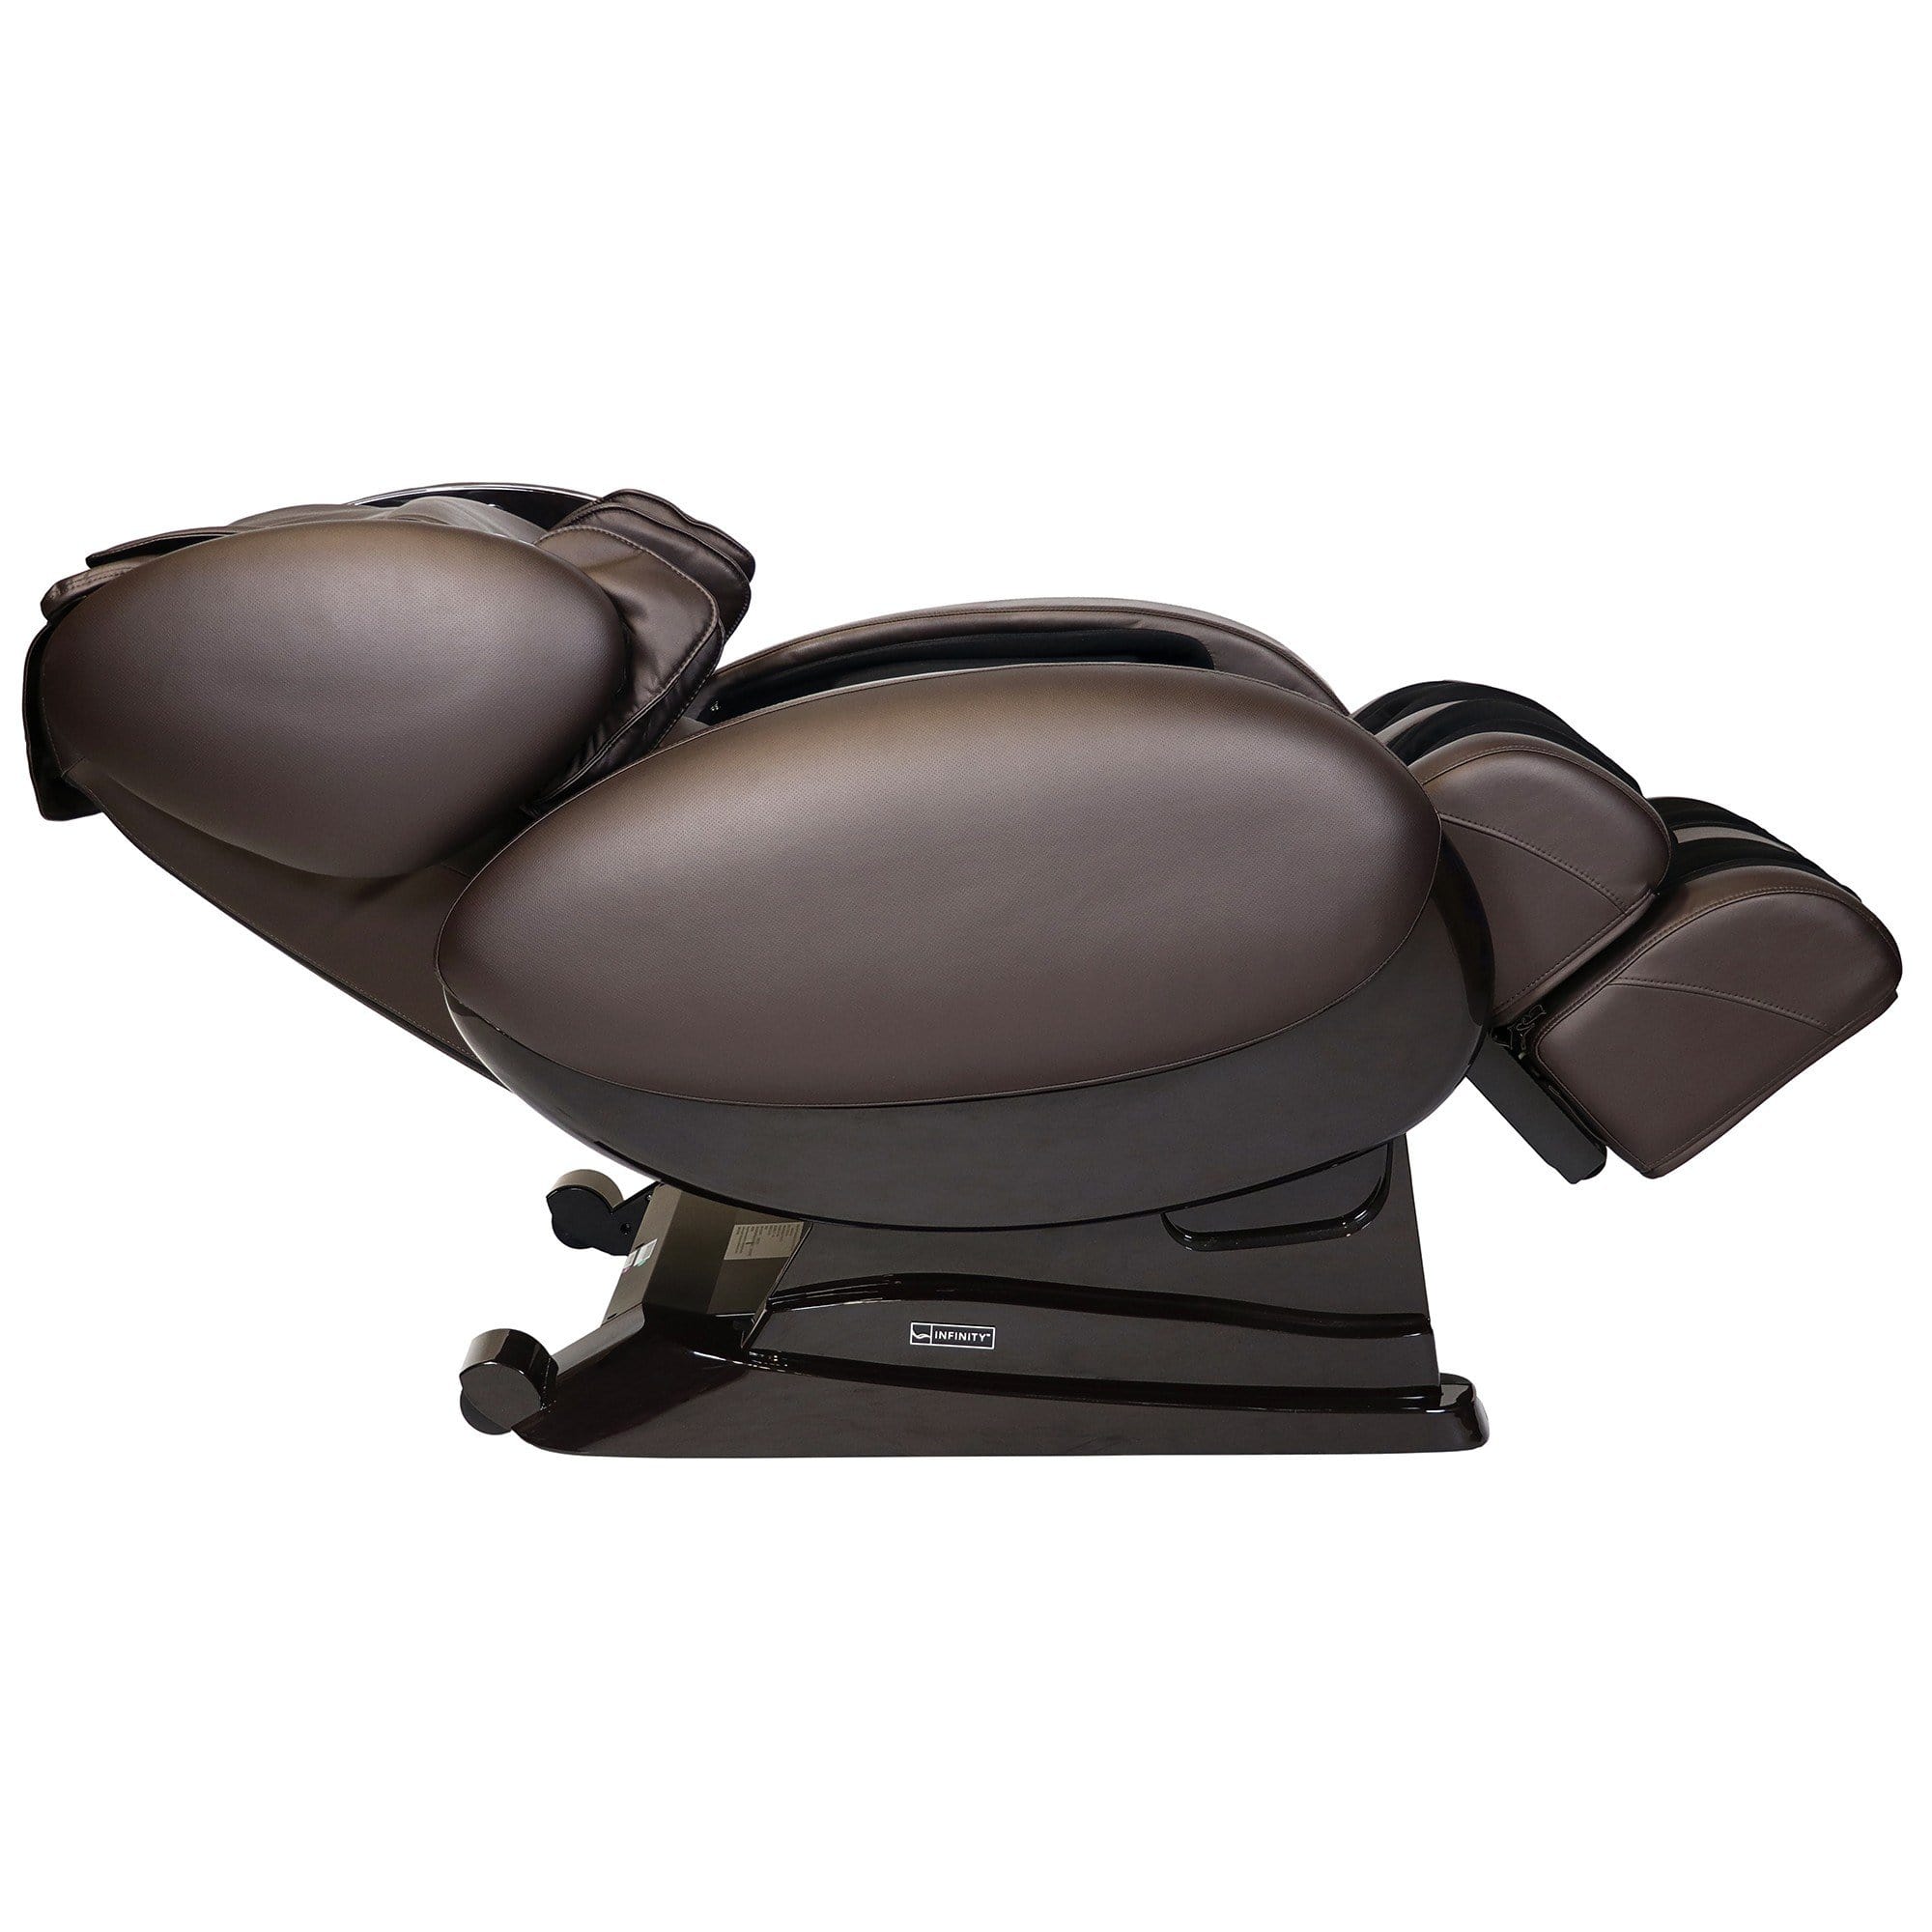 Infinity Massage Chair Infinity IT-8500 Plus Massage Chair